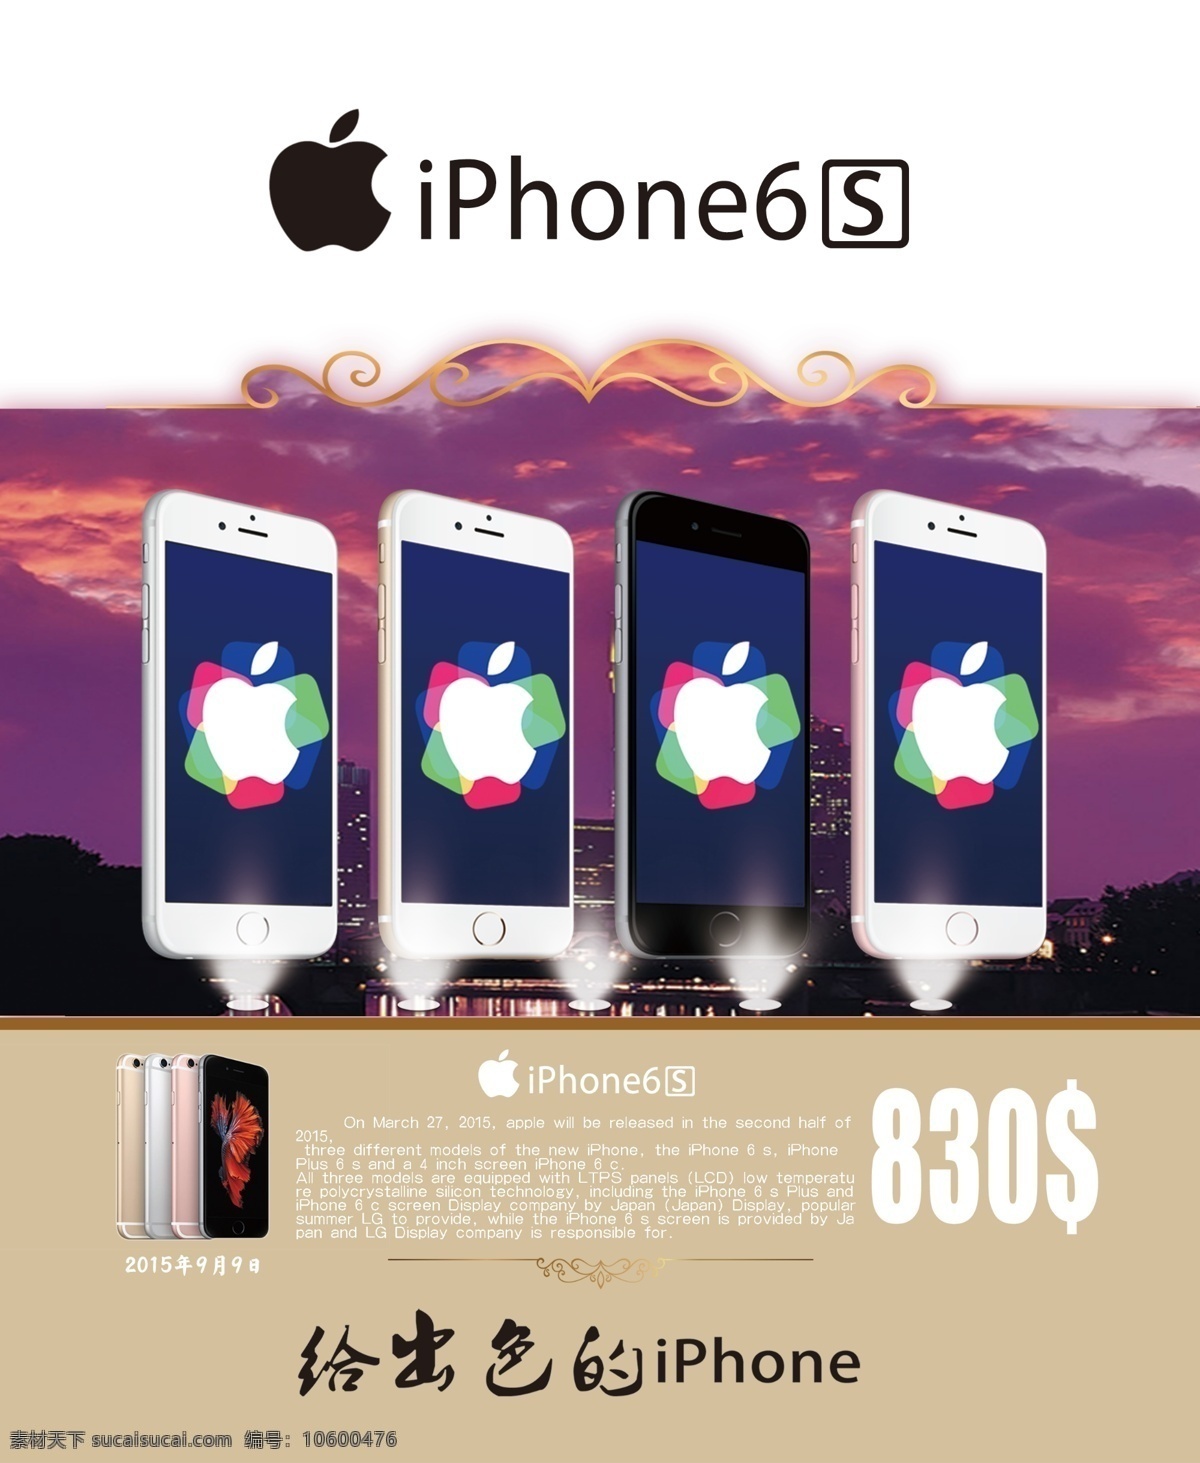 iphone6s 宣传海报 海报 彩页 iphone iphone5s iphone6 iphone4s 苹果手机 苹果 苹果6 手机 手机素材 海报杂志 现代科技 数码产品 白色